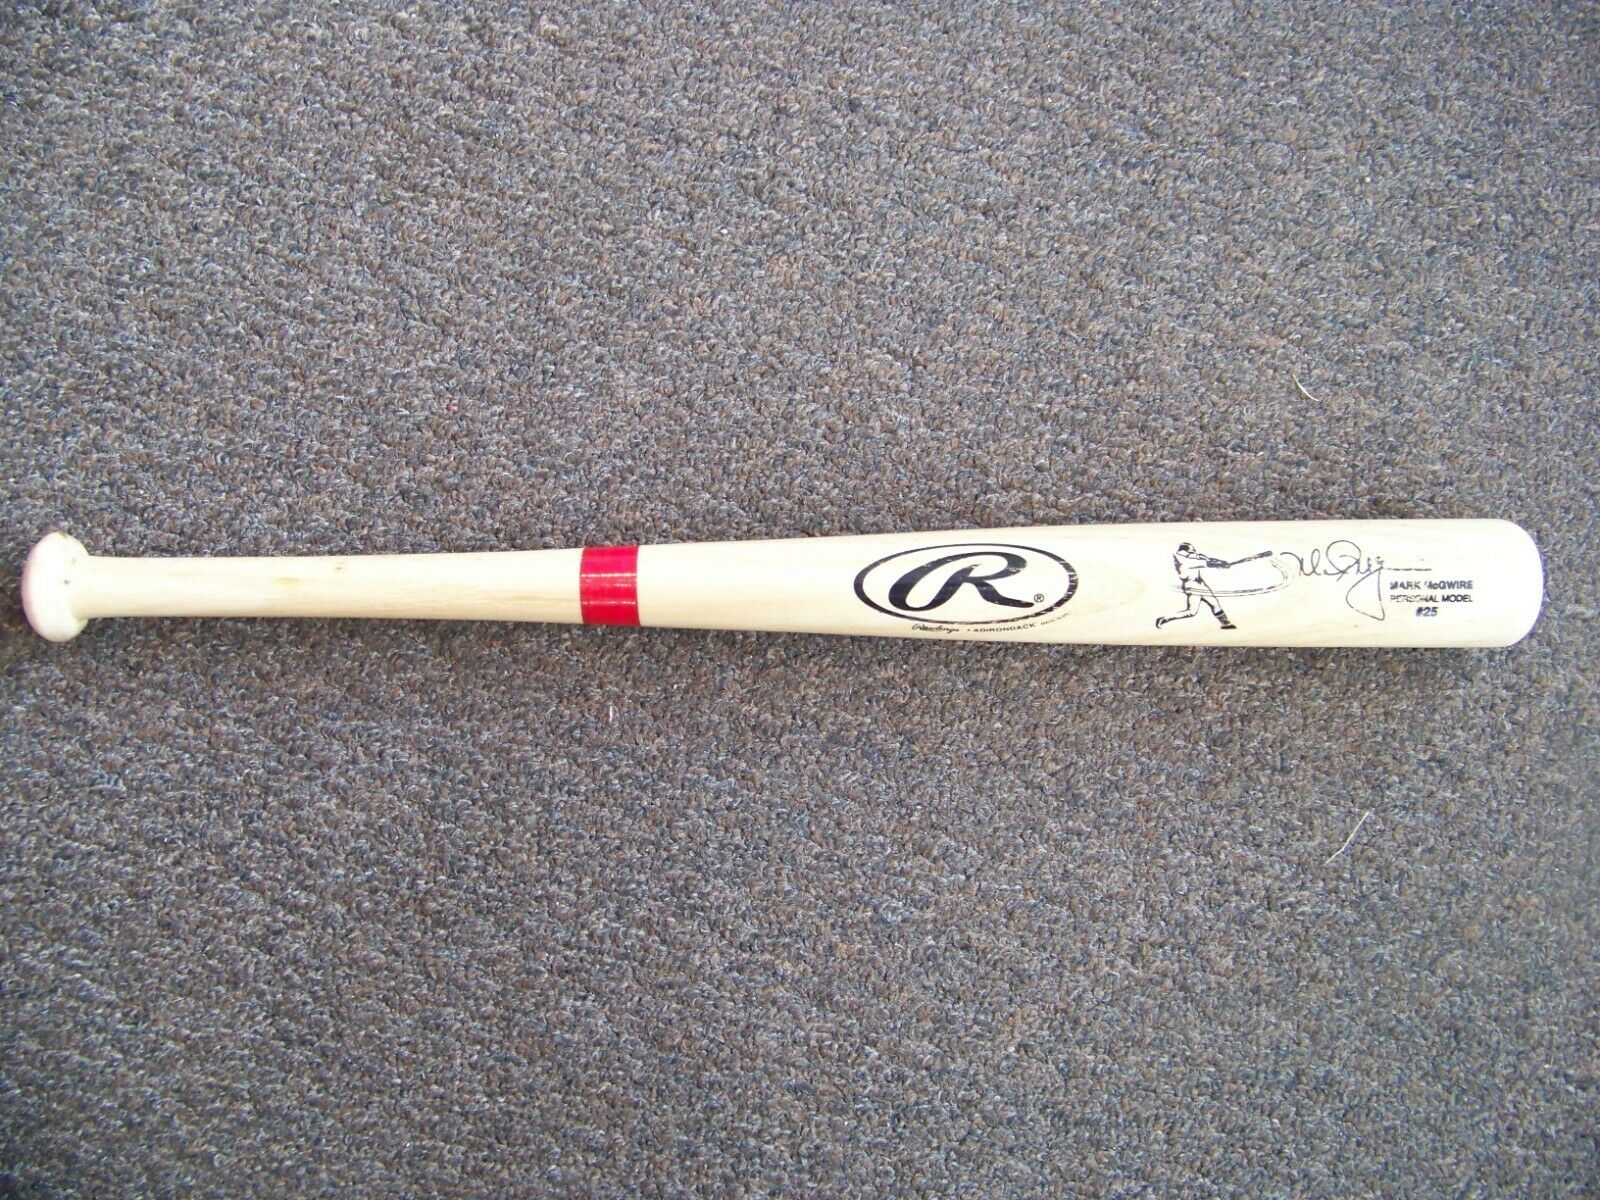 1998 Rawlings Adirondack Mark Mcgwire Mini-bat 17" St. Louis Cardinals